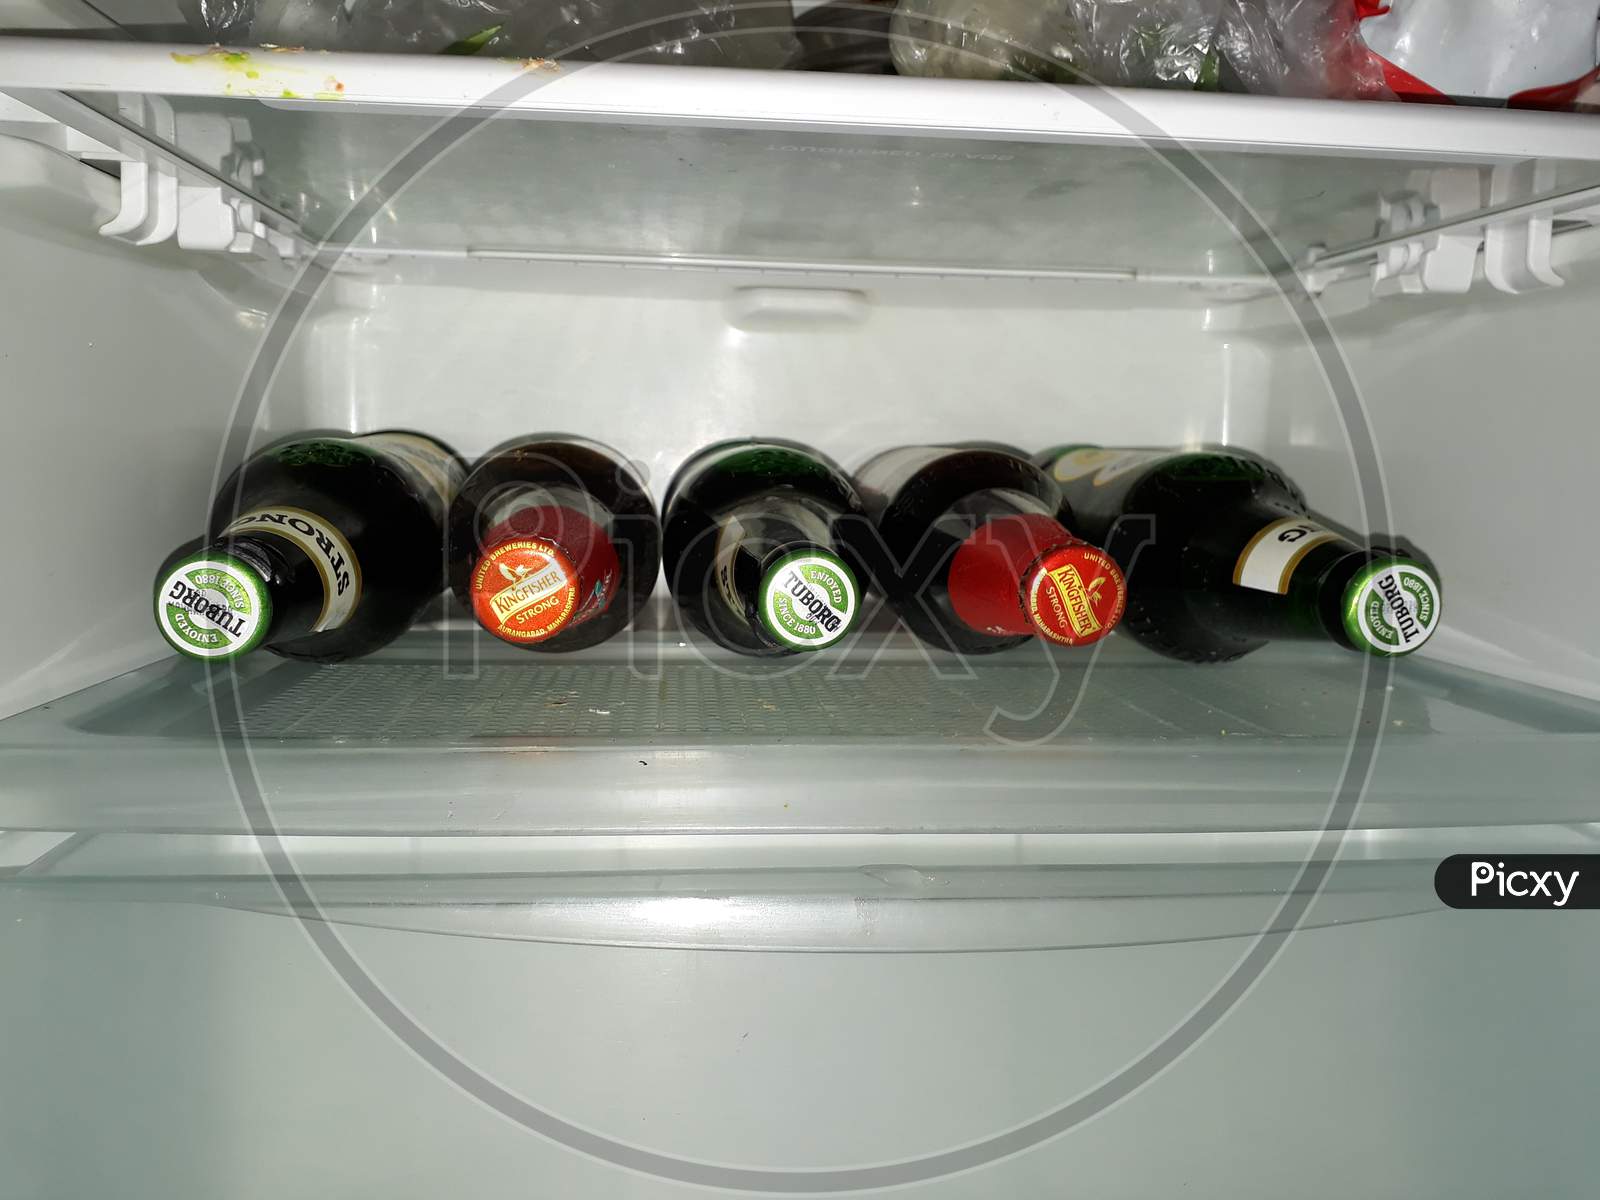 Refrigerator full of Beer Bottles